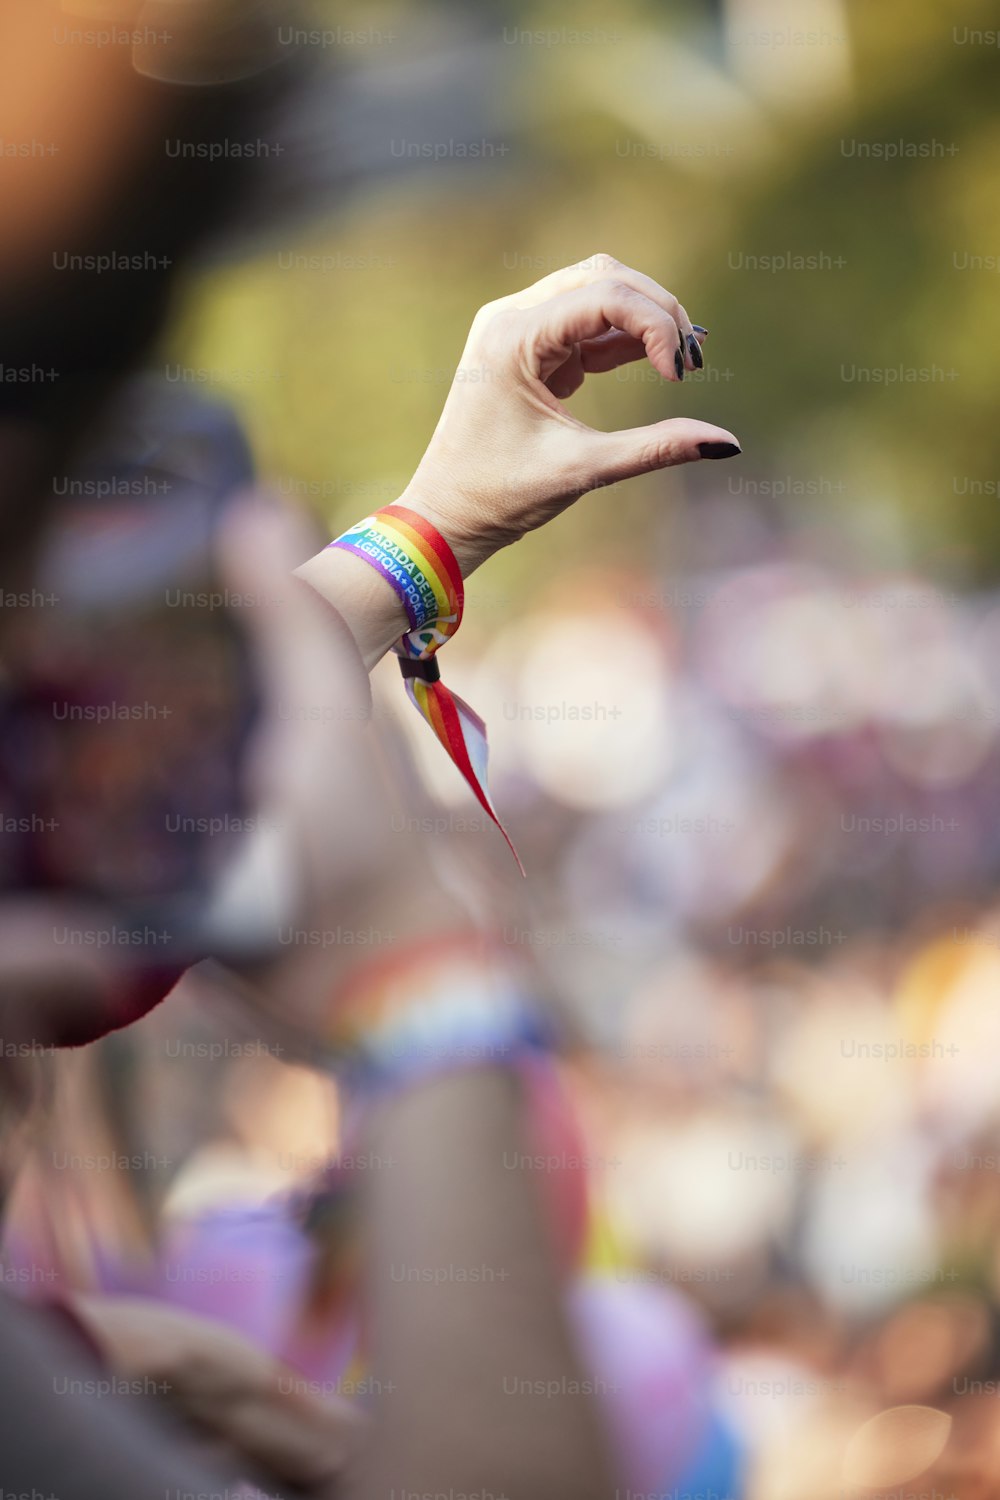 a woman's hand holding a rainbow bracelet